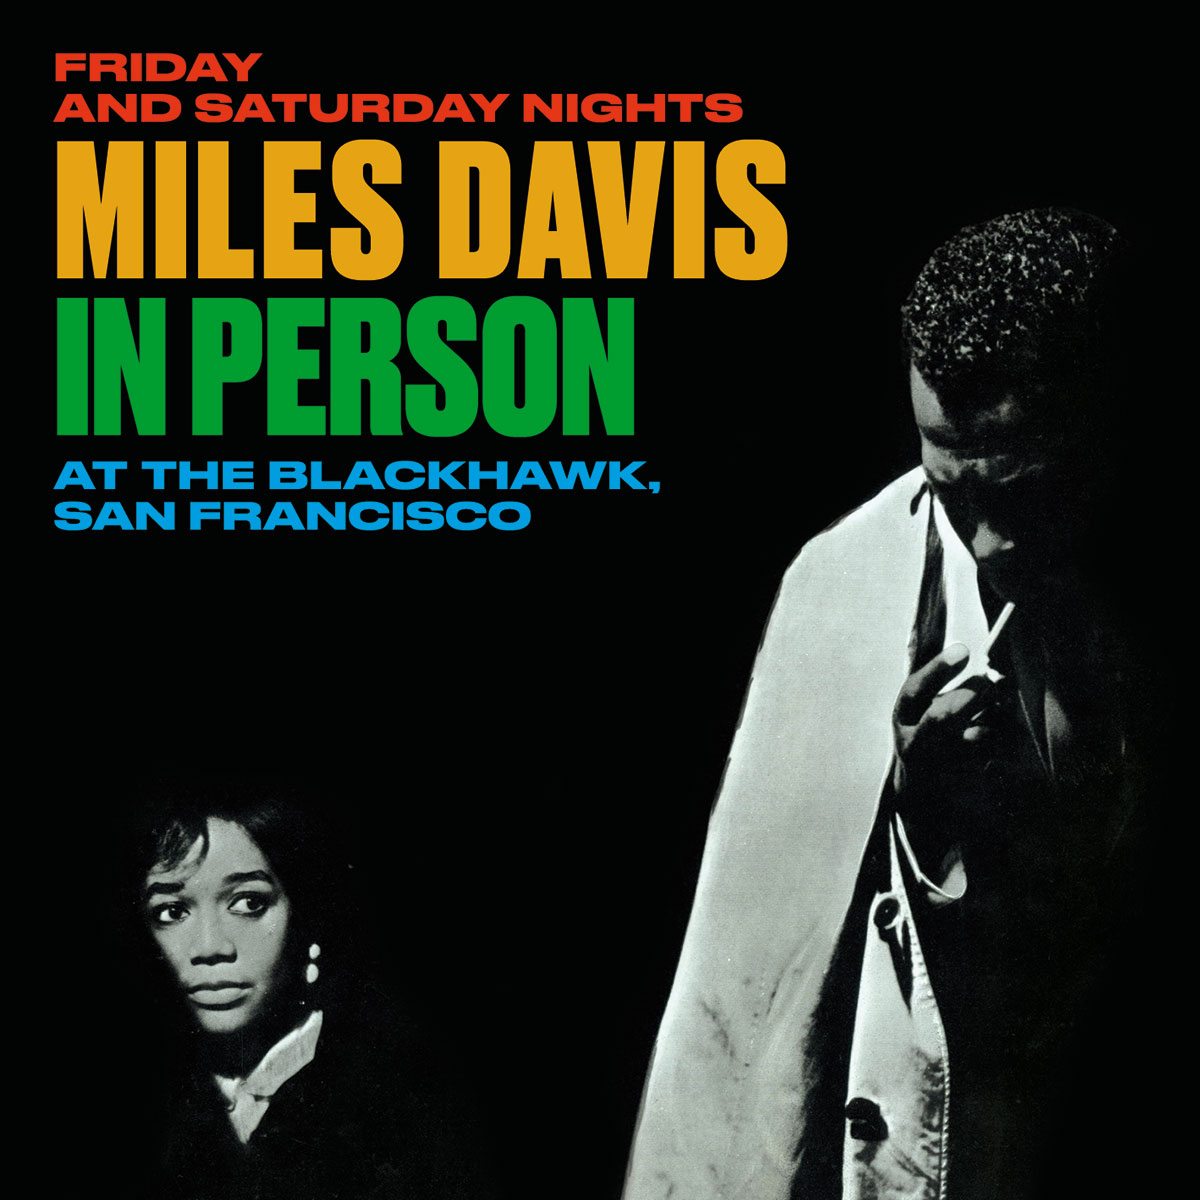 In Person At The Blackhawk, San Francisco Friday And Saturday Nights